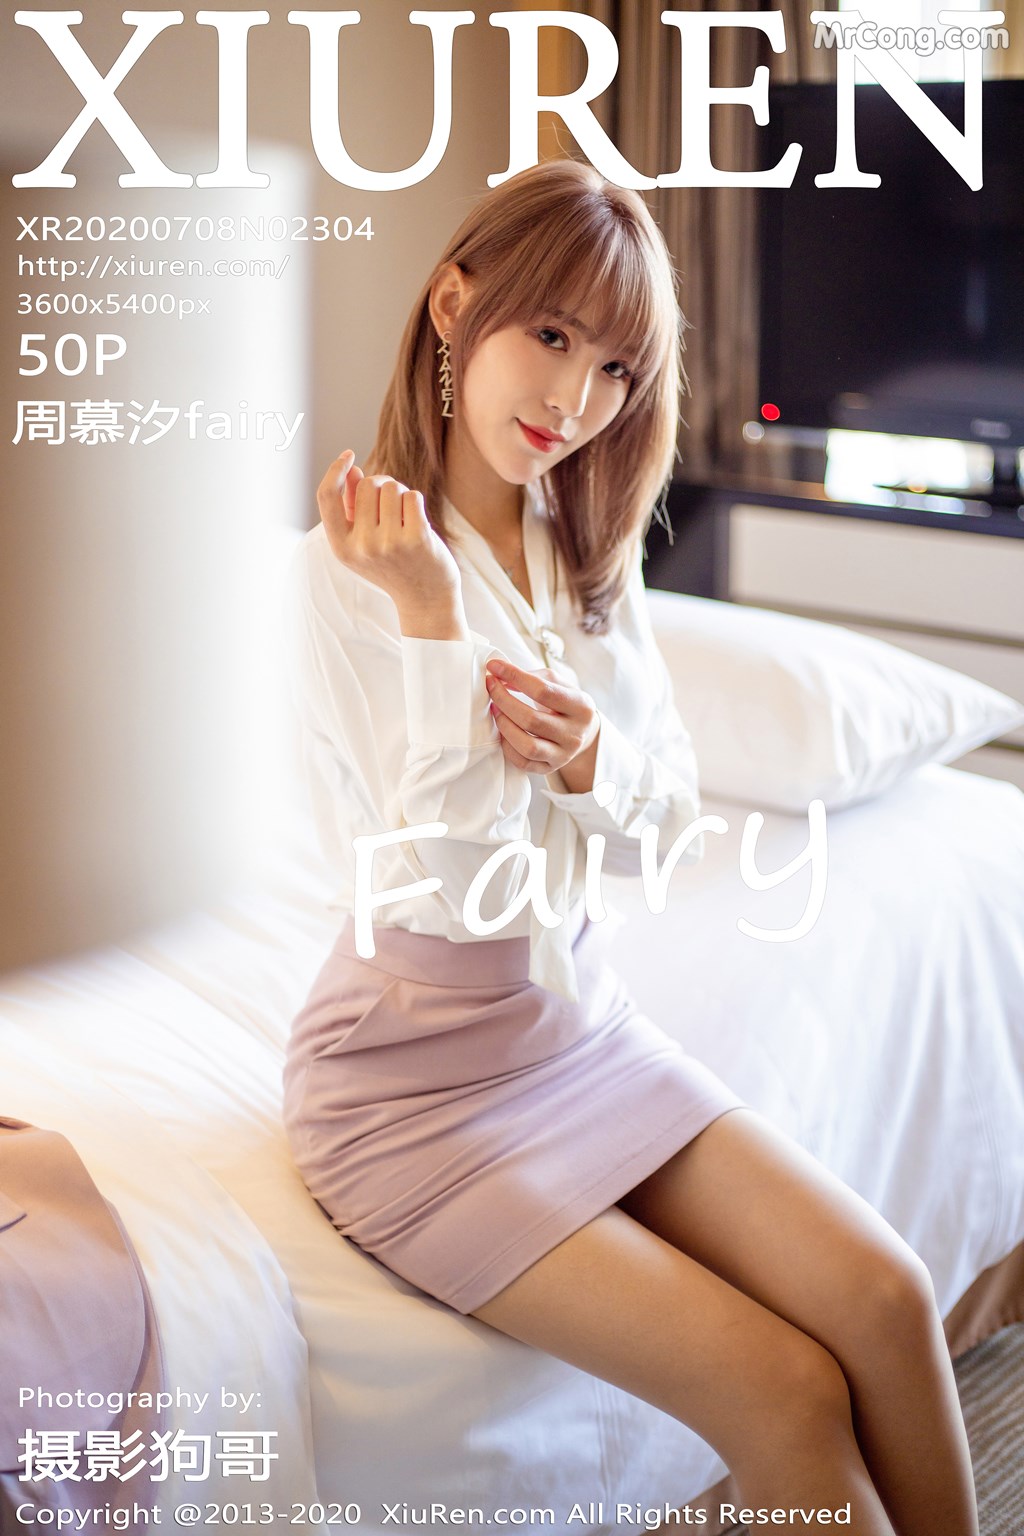 [XIUREN] No.2304 周慕汐fairy Cover Photo